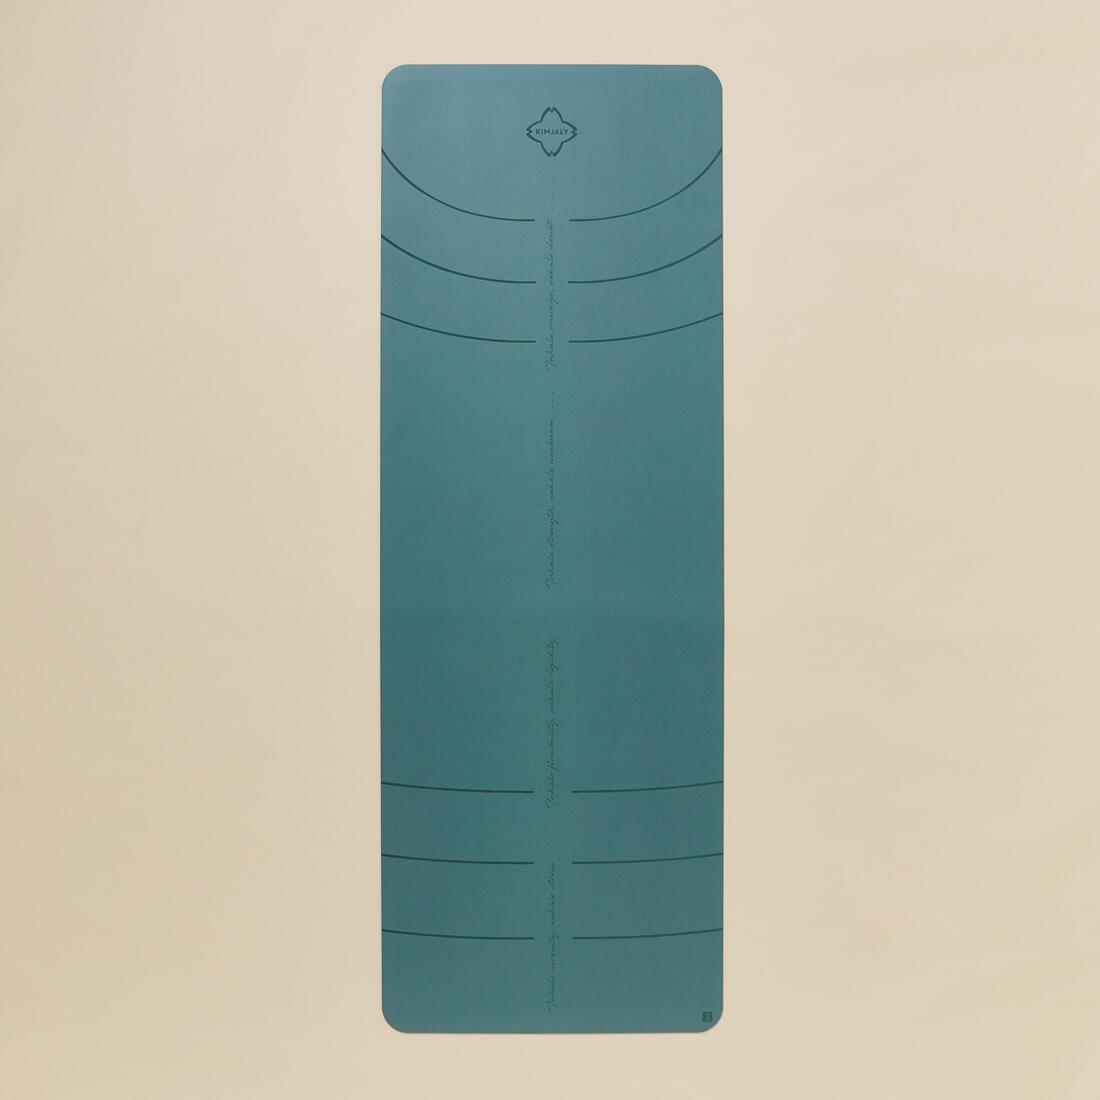 KIMJALY - Yoga Mat Grip - 185Cm X 65Cm X 3Mm, Blue